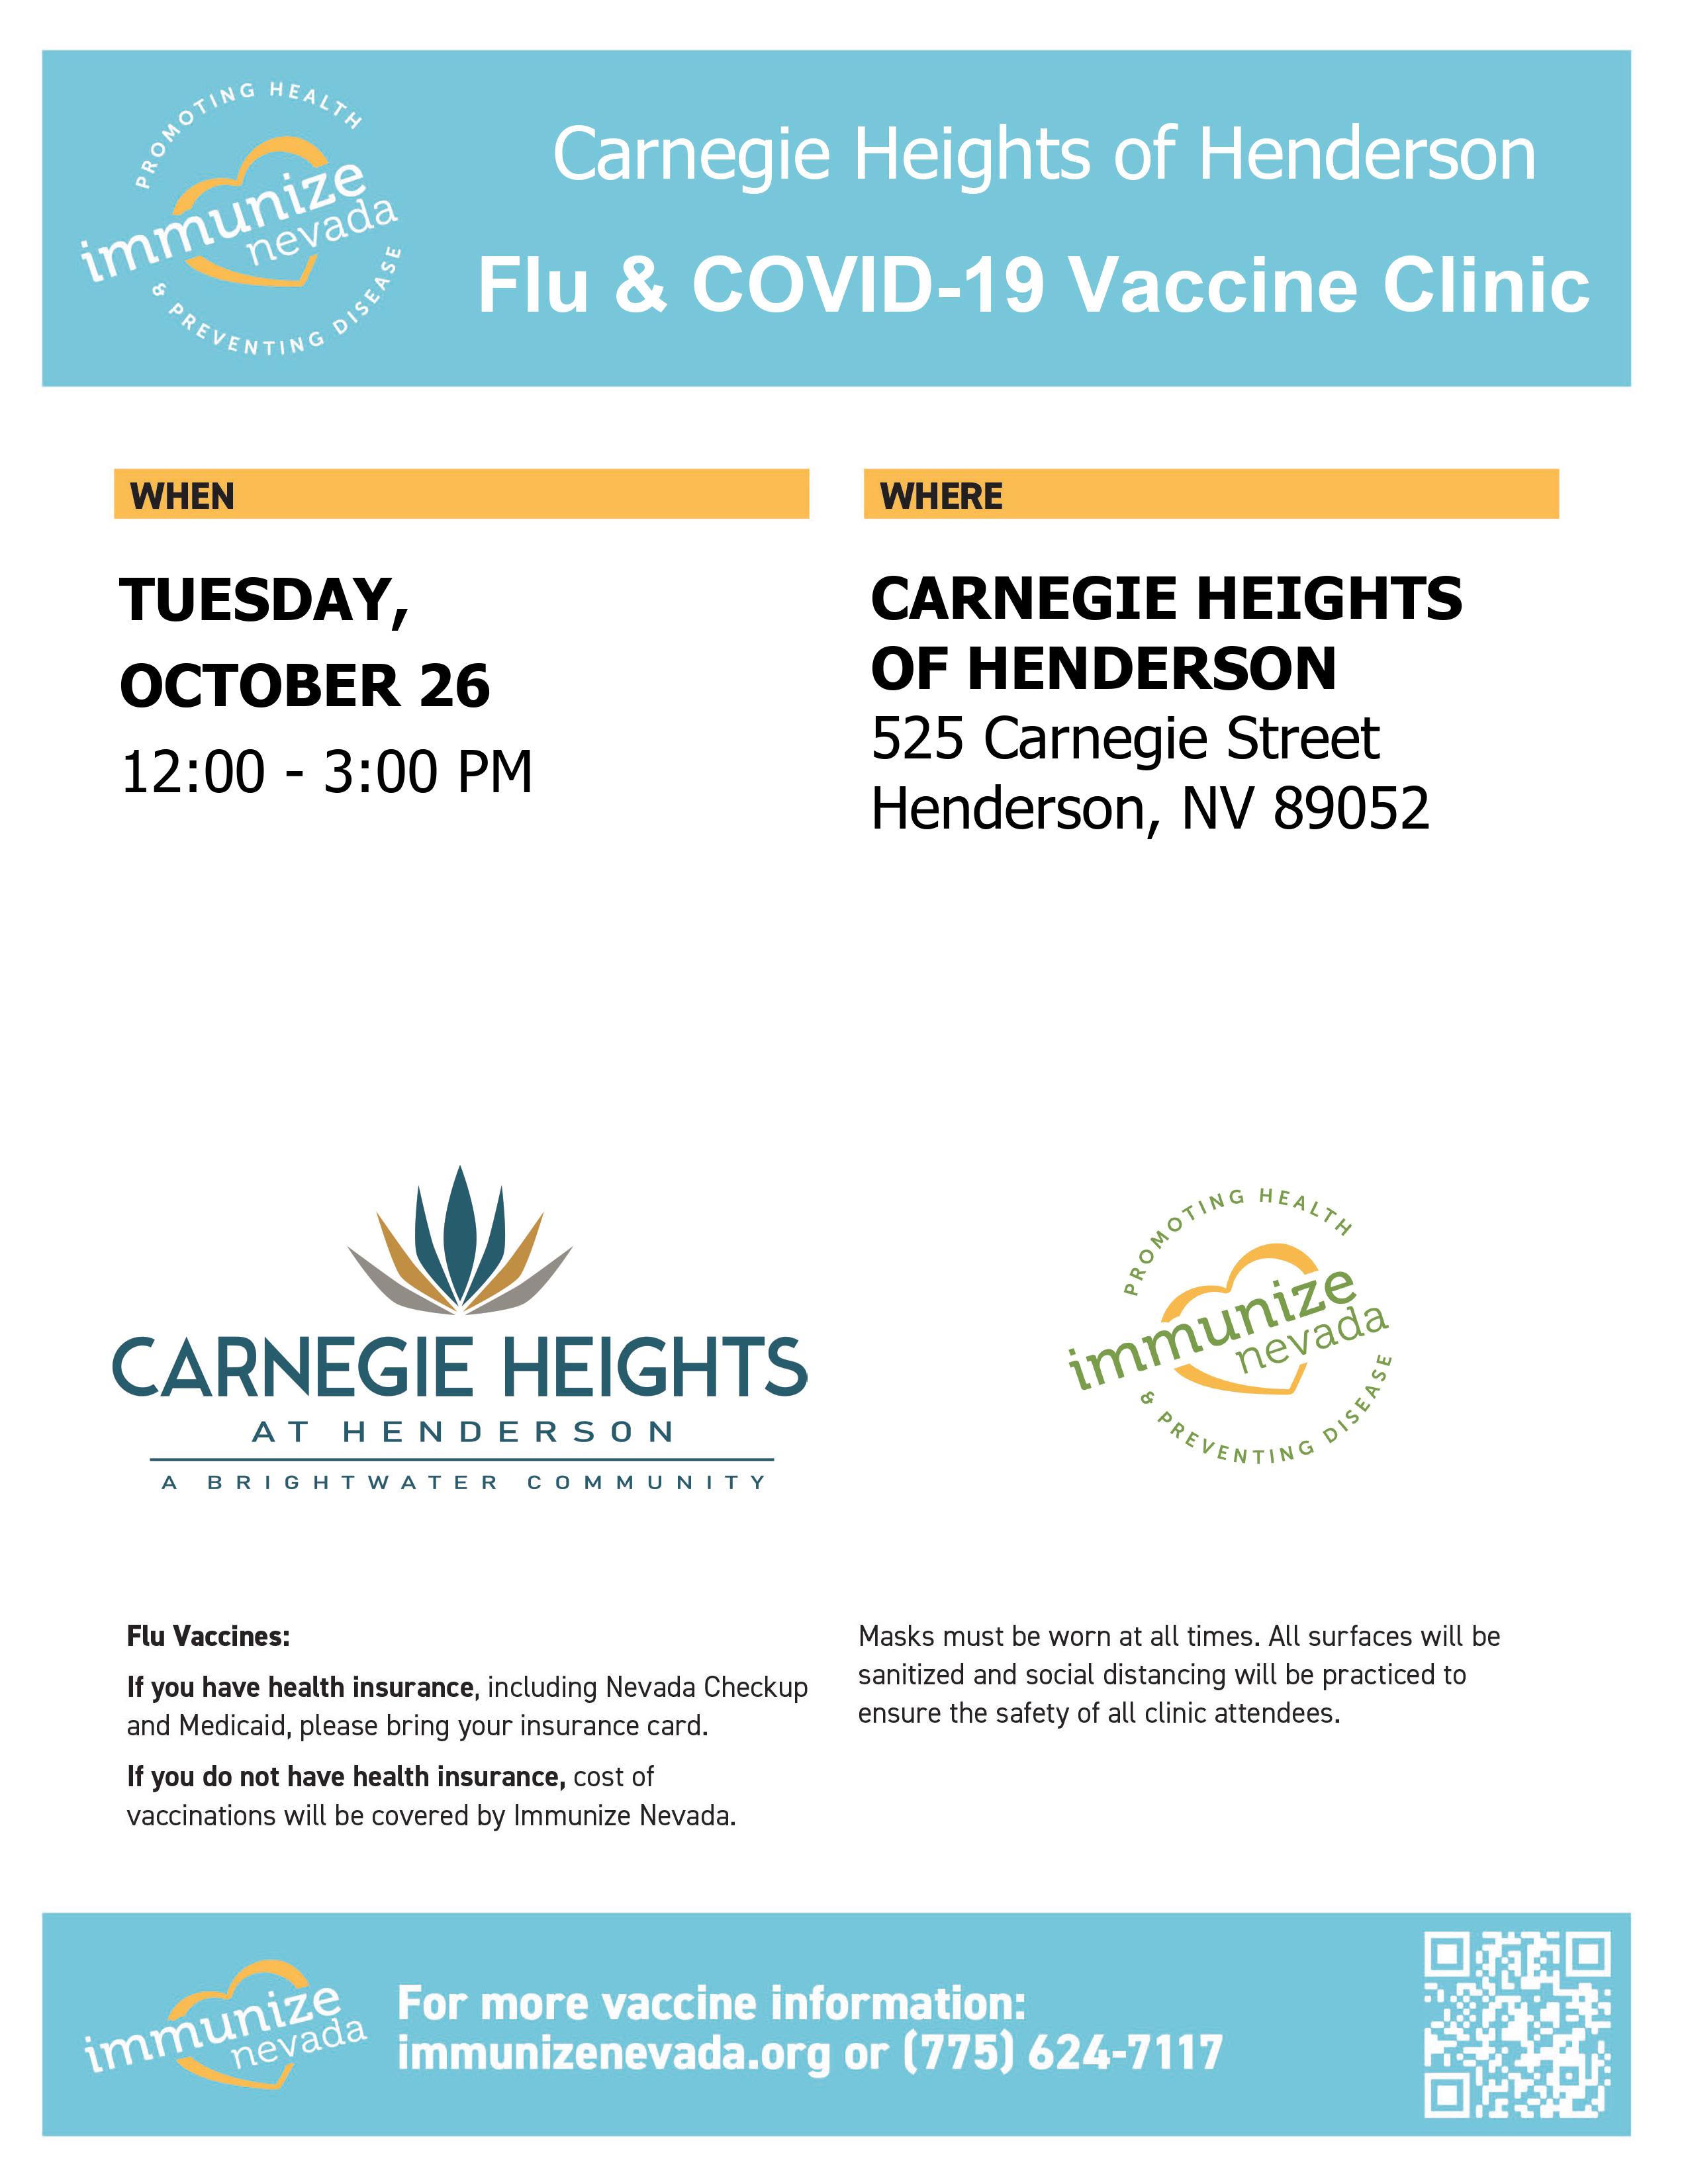 COVID vaccine drive event flyer